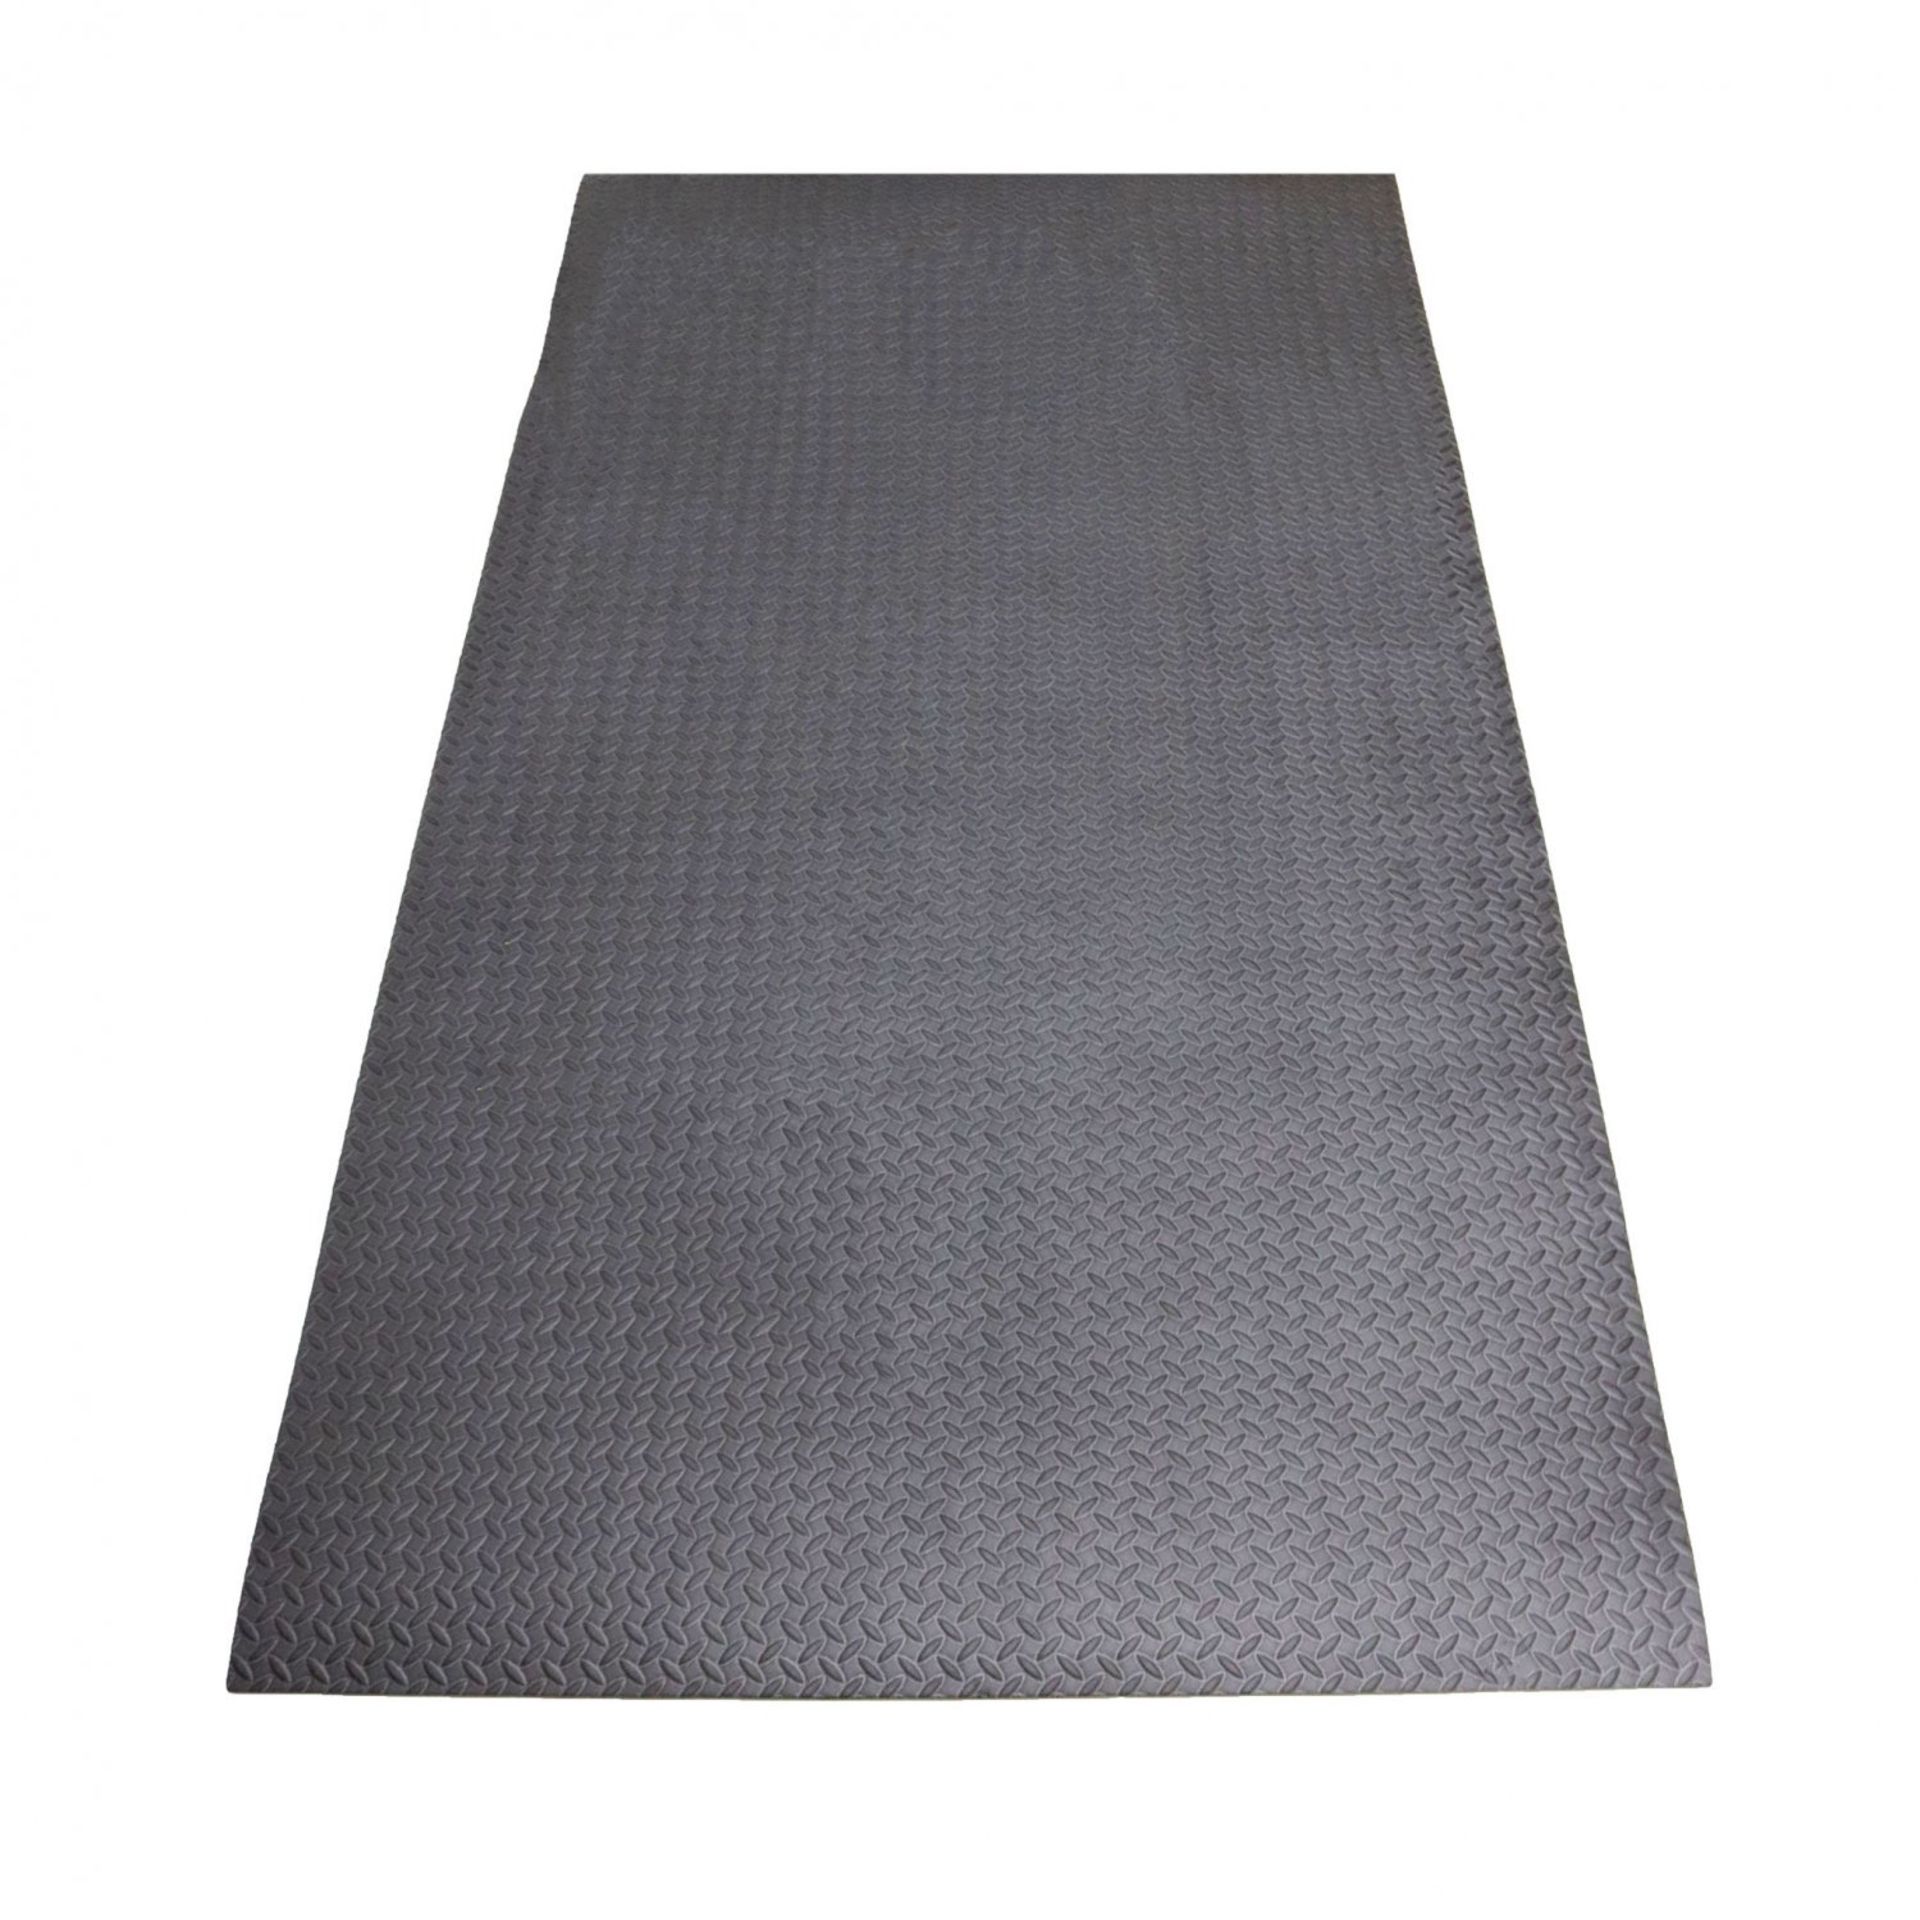 (F12) Large Multi-Purpose Safety EVA Floor Mat Play Garage Gym Matting Dimensions: 233 x 118cm...